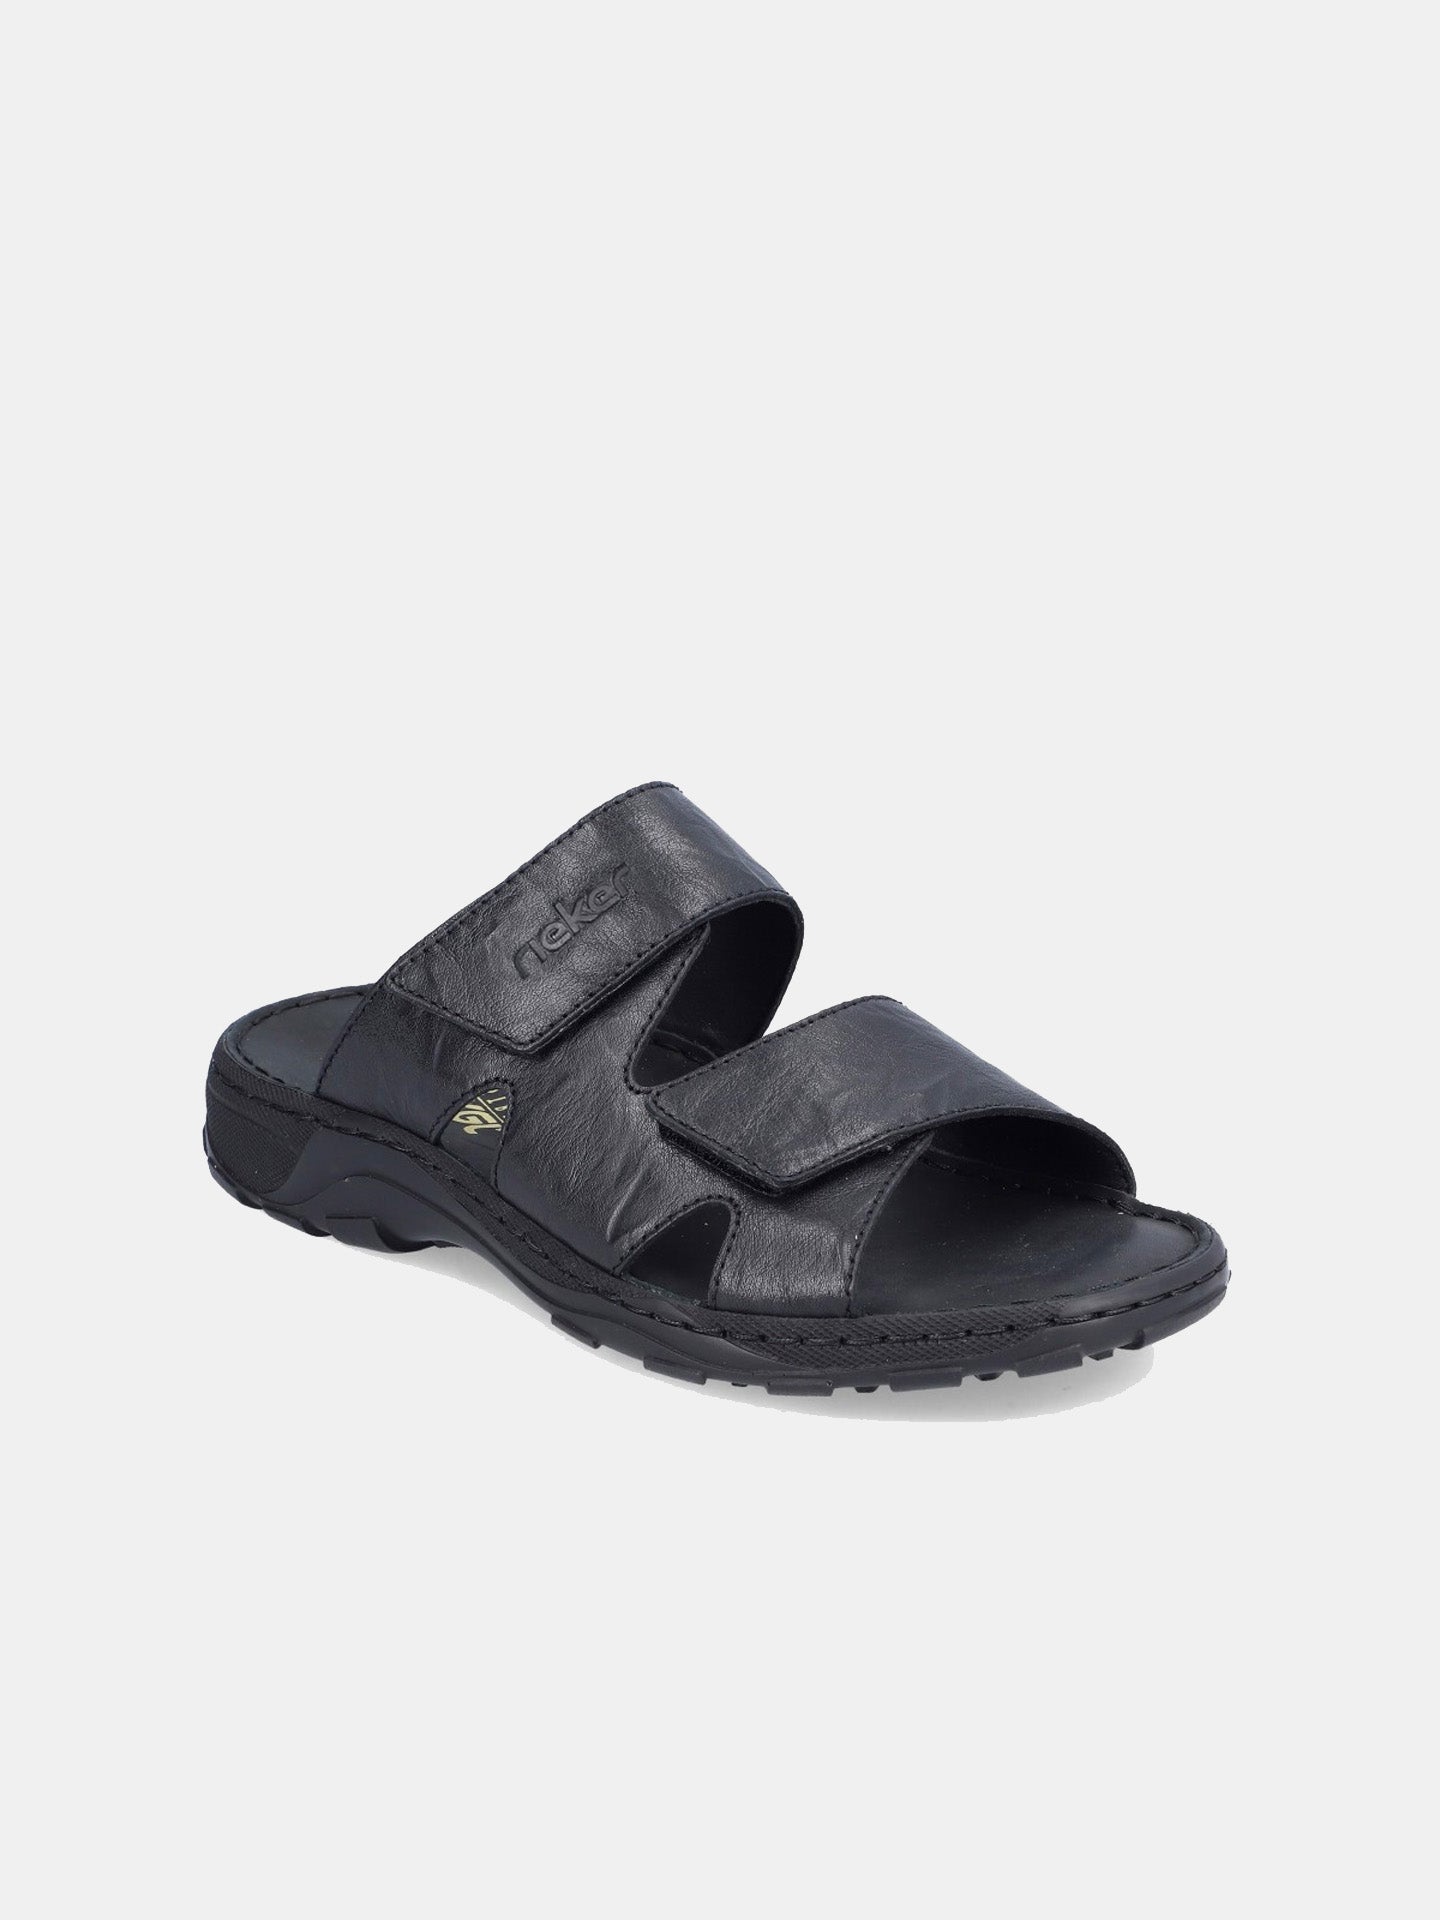 Rieker 26072-01 Men's Sandals